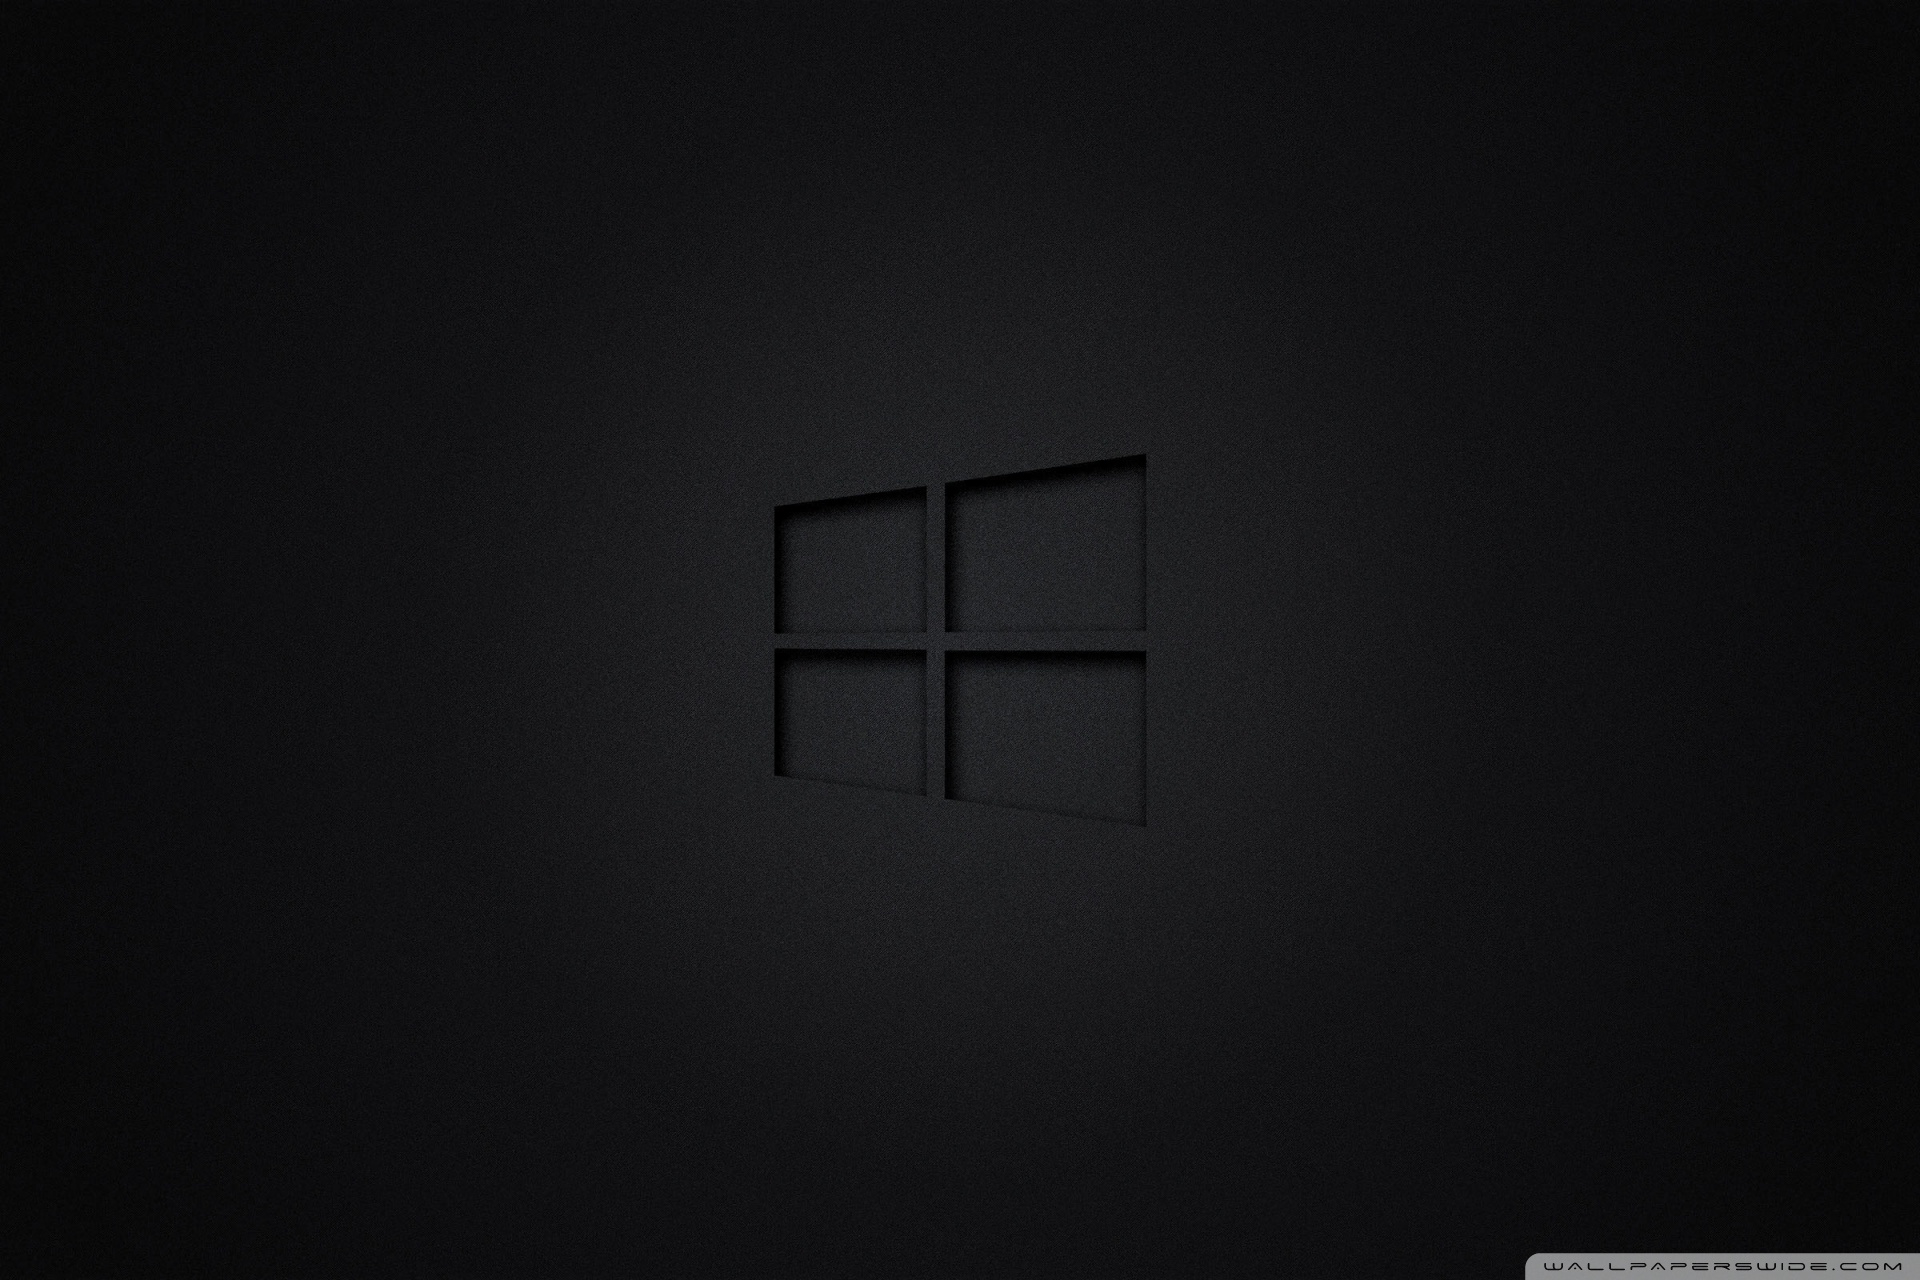 Windows 10 Black Ultra Hd Desktop Background Wallpaper For 4k Uhd Tv Multi Display Dual Monitor Tablet Smartphone